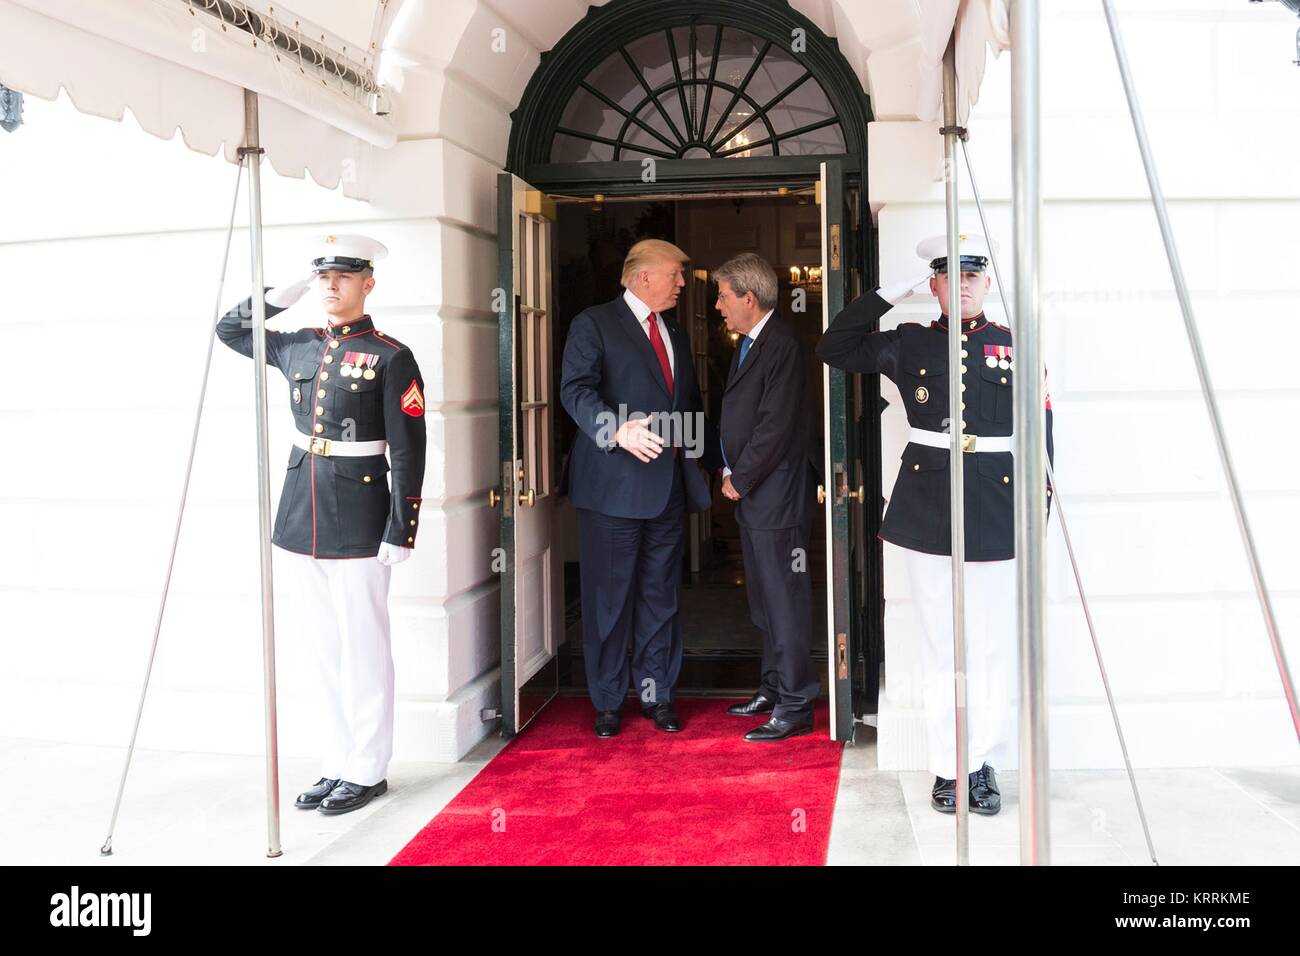 U.S. President Donald Trump (left) bids farewell to Italian Prime Minister Paolo Gentiloni at the White House South Portico entrance April 20, 2017 in Washington, DC. Stock Photo